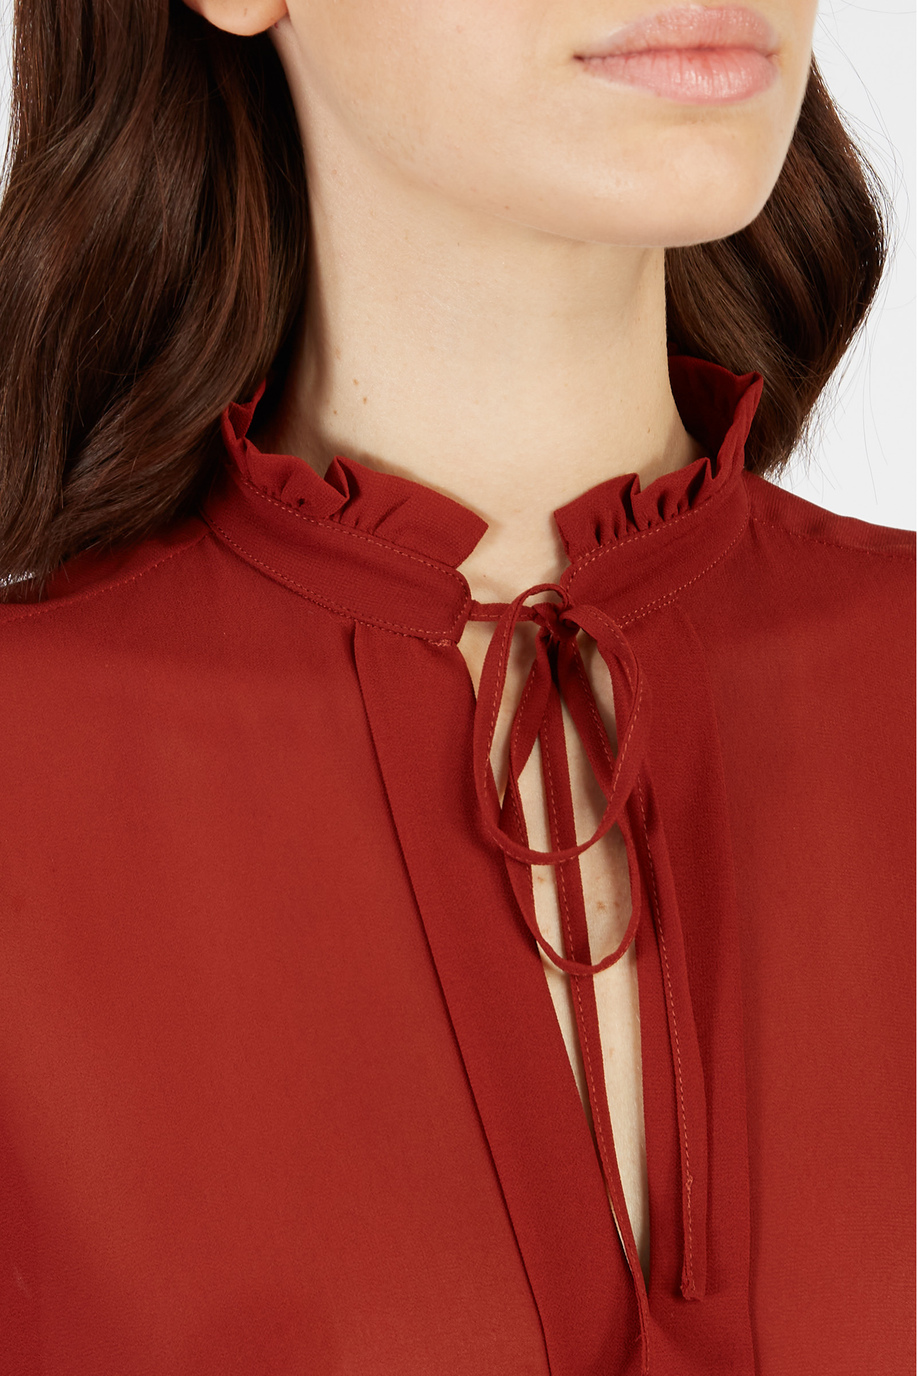 Women’s shirt Argentina fabric georgette regular fit long sleeves